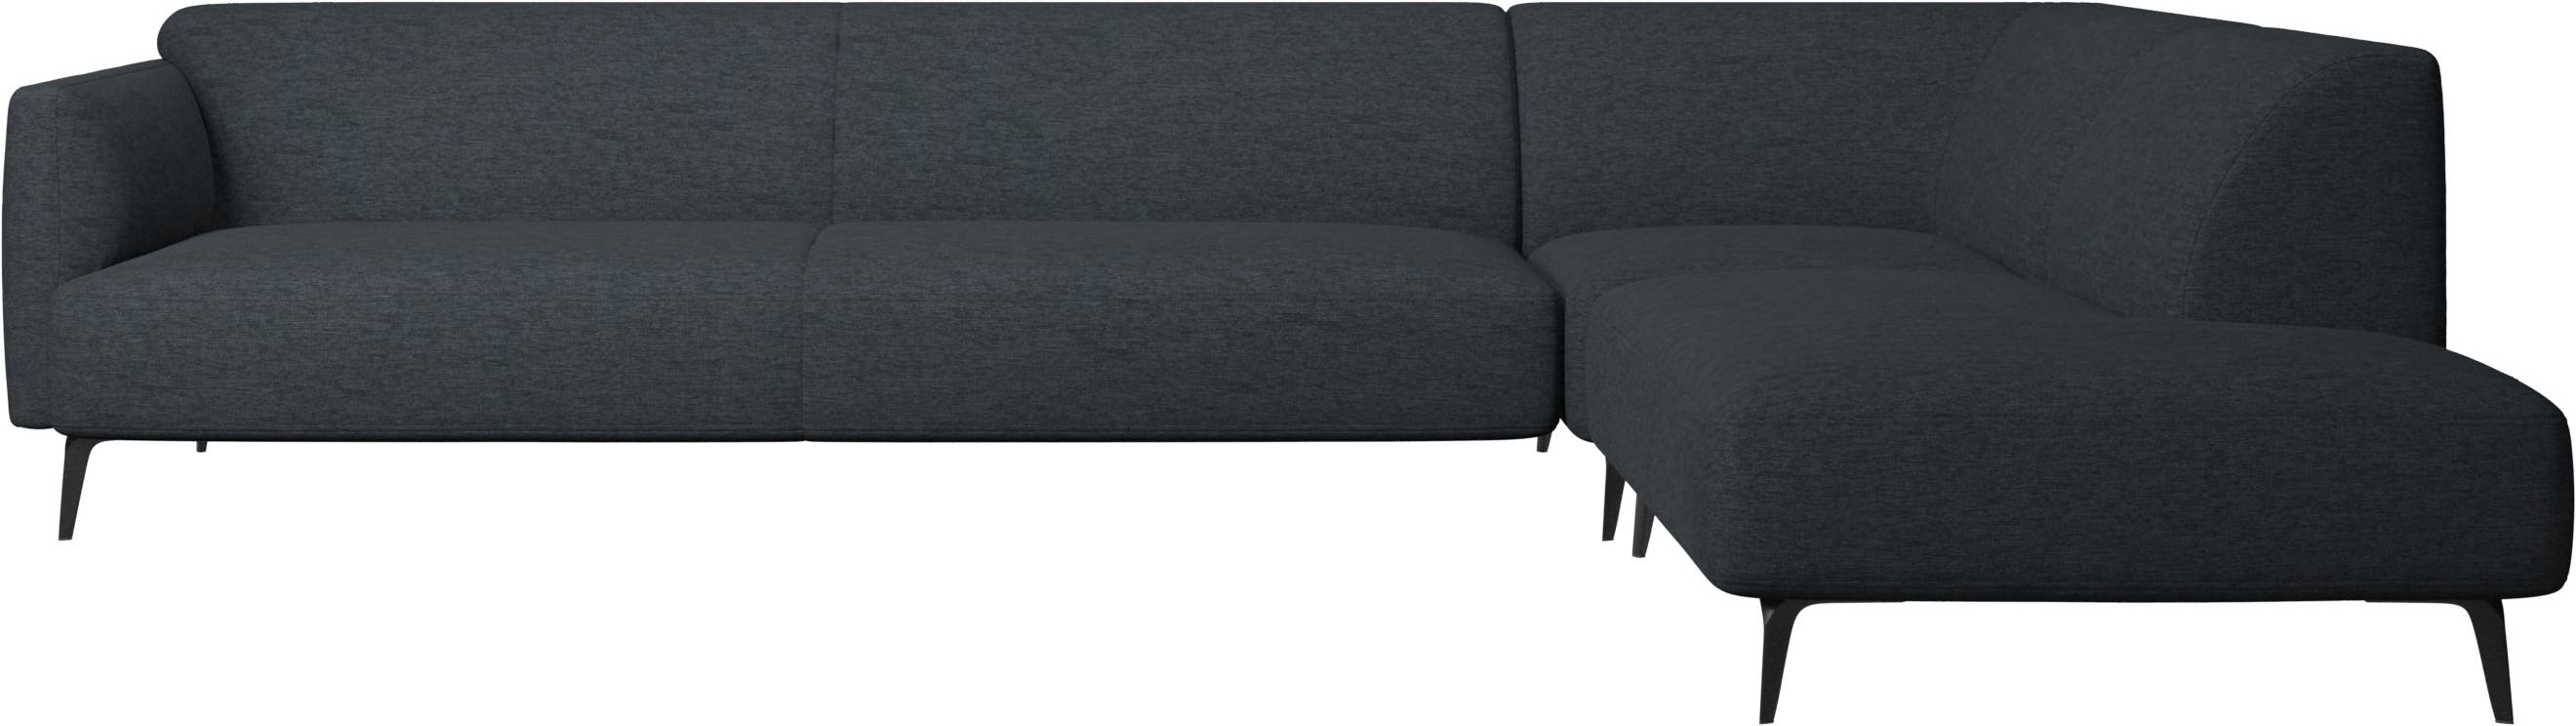 Modena corner sofa with lounging unit